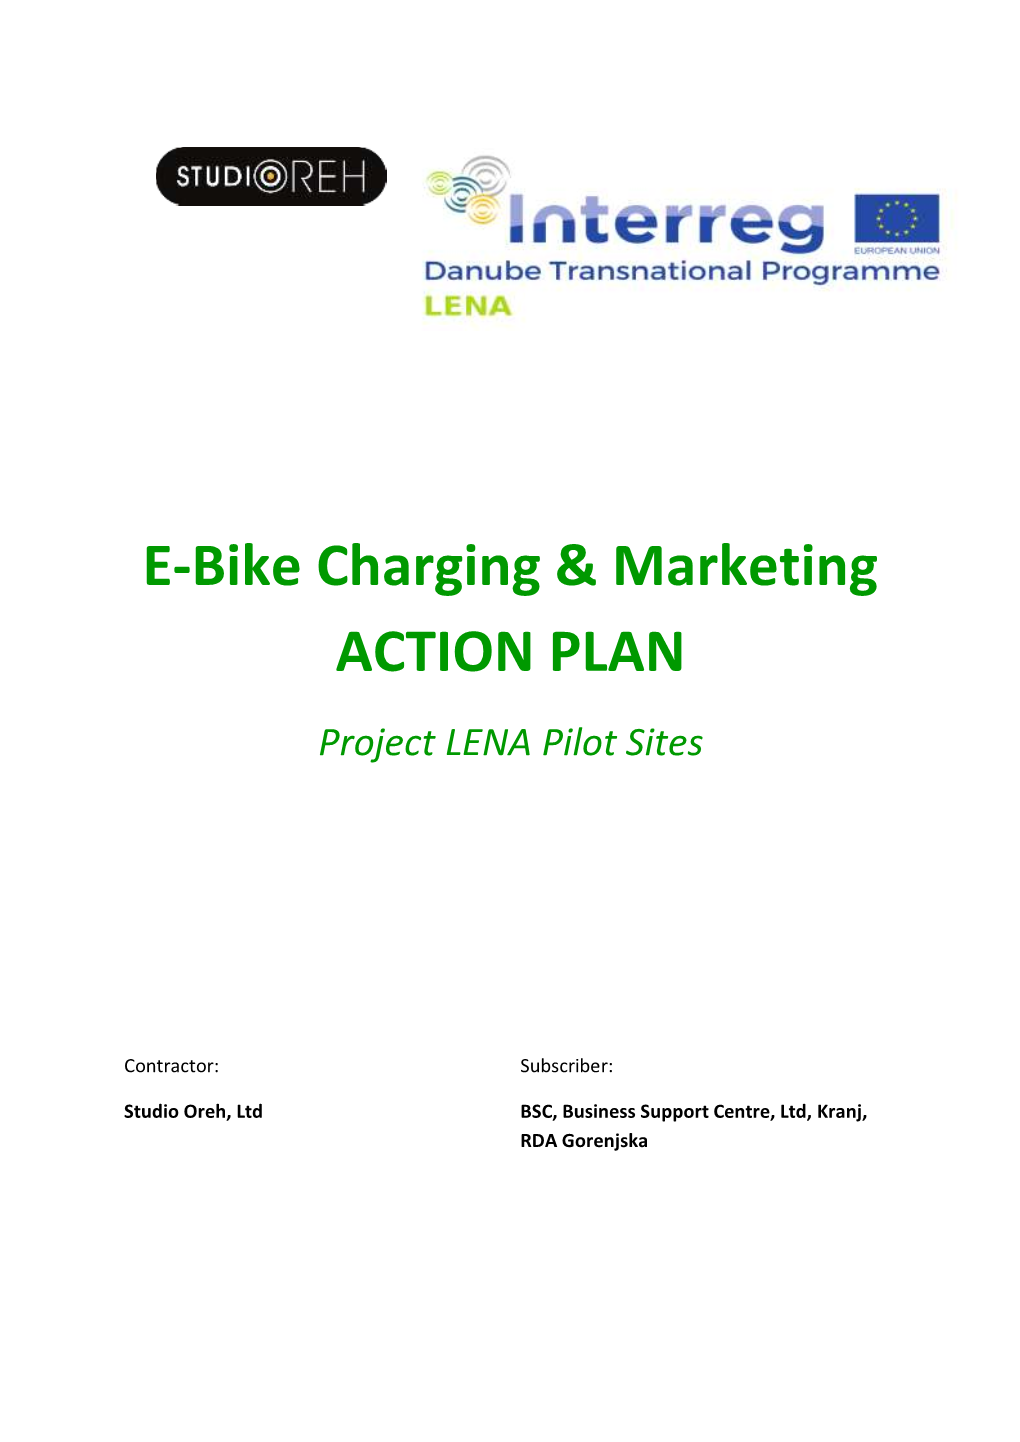 E-Bike Charging & Marketing ACTION PLAN